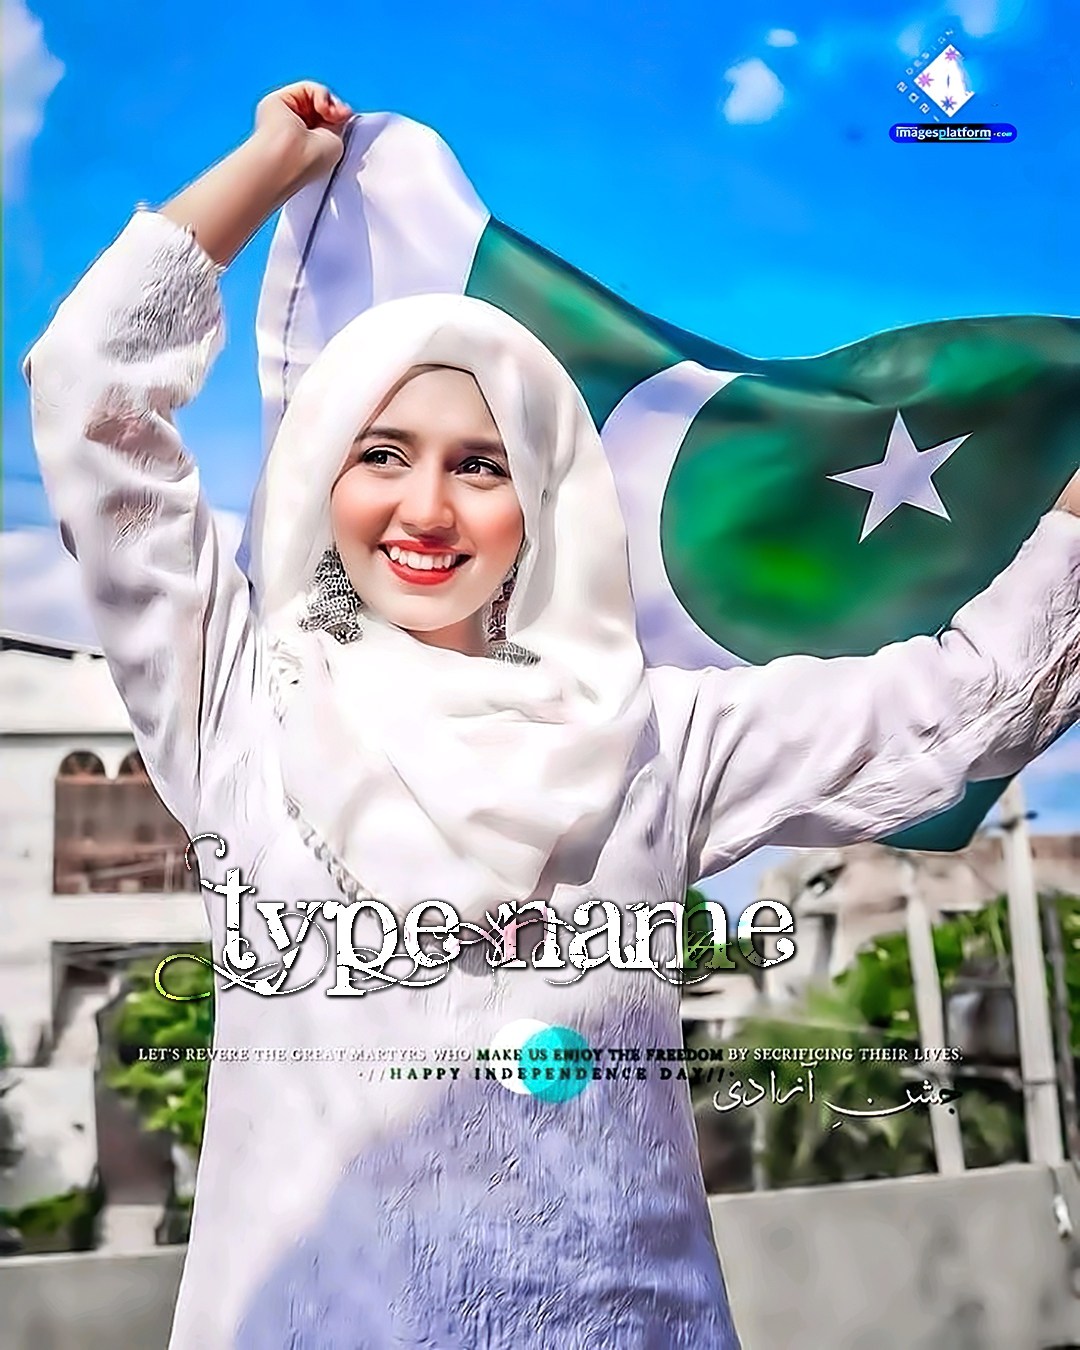 Pakistan Flag Background Design Free Download From pixlokcom